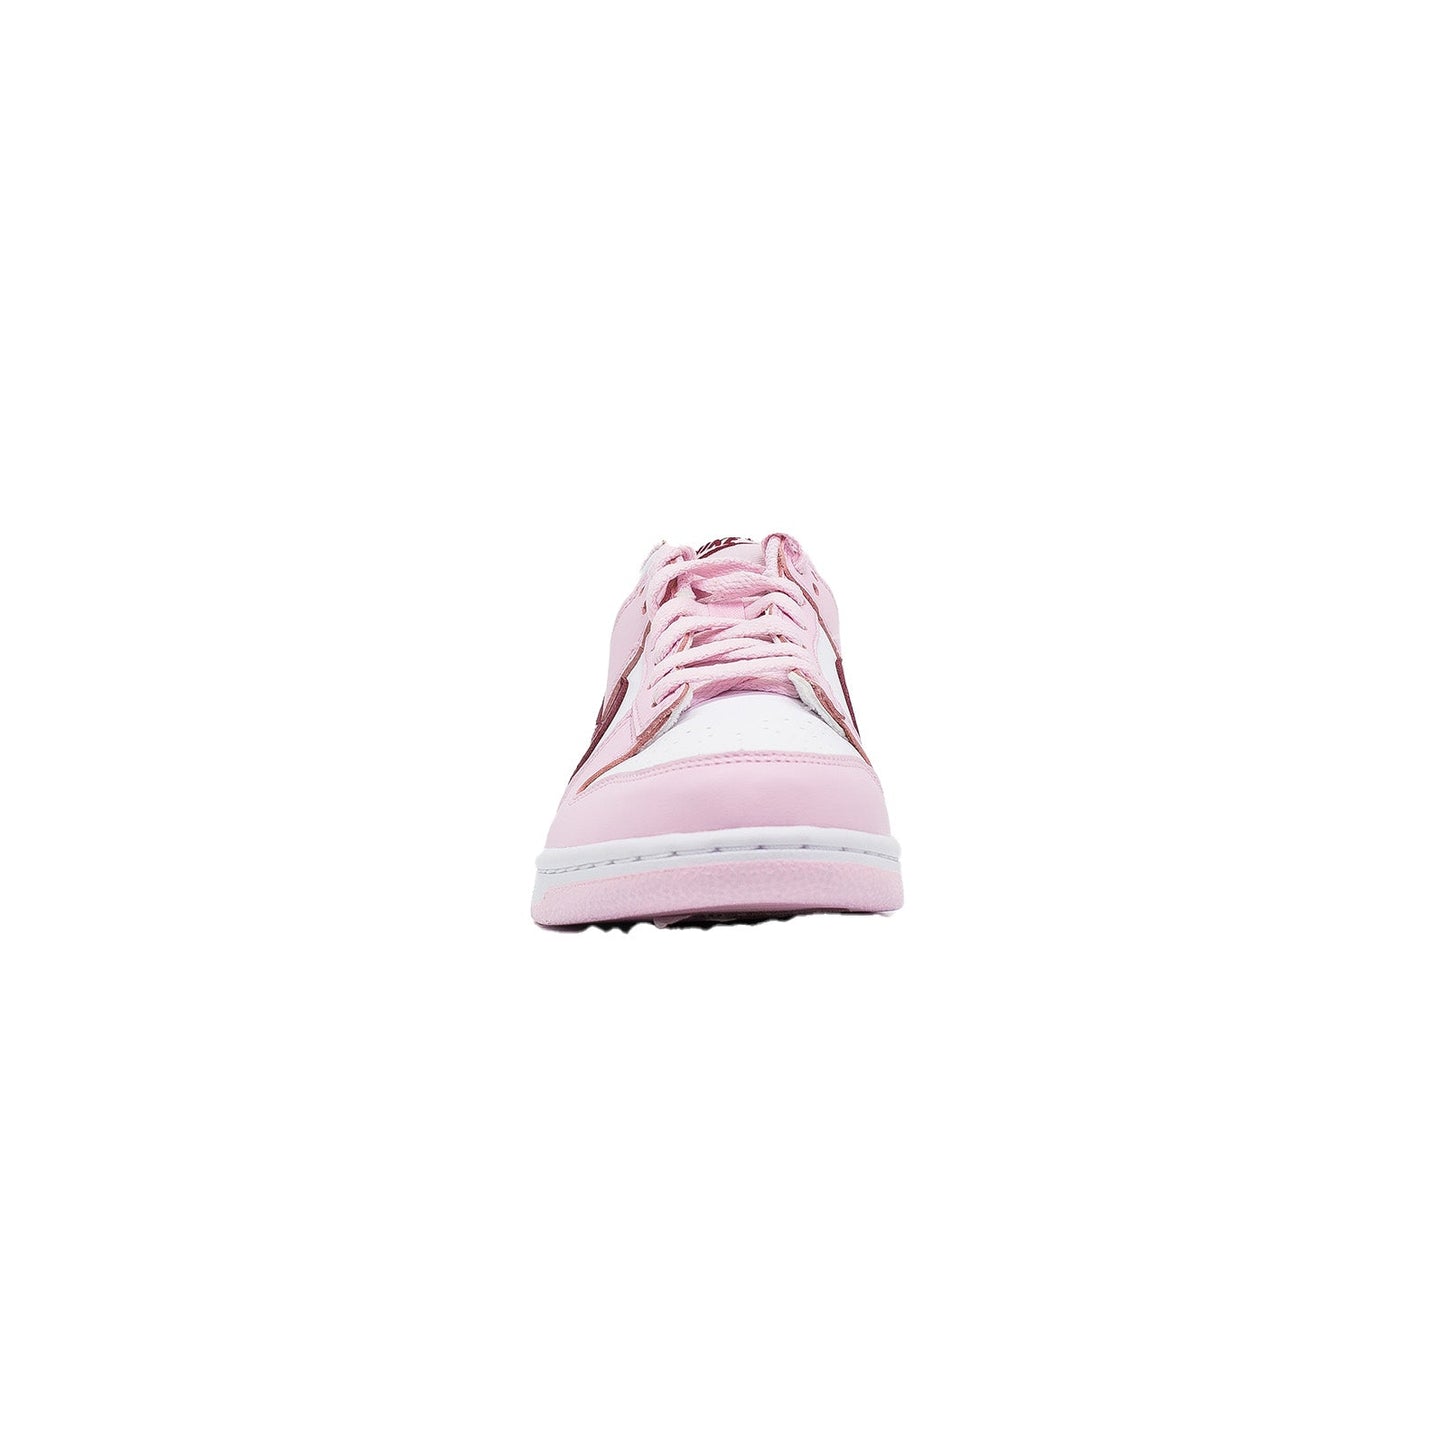 NikeDunkLow GS PinkFoam3 1445x